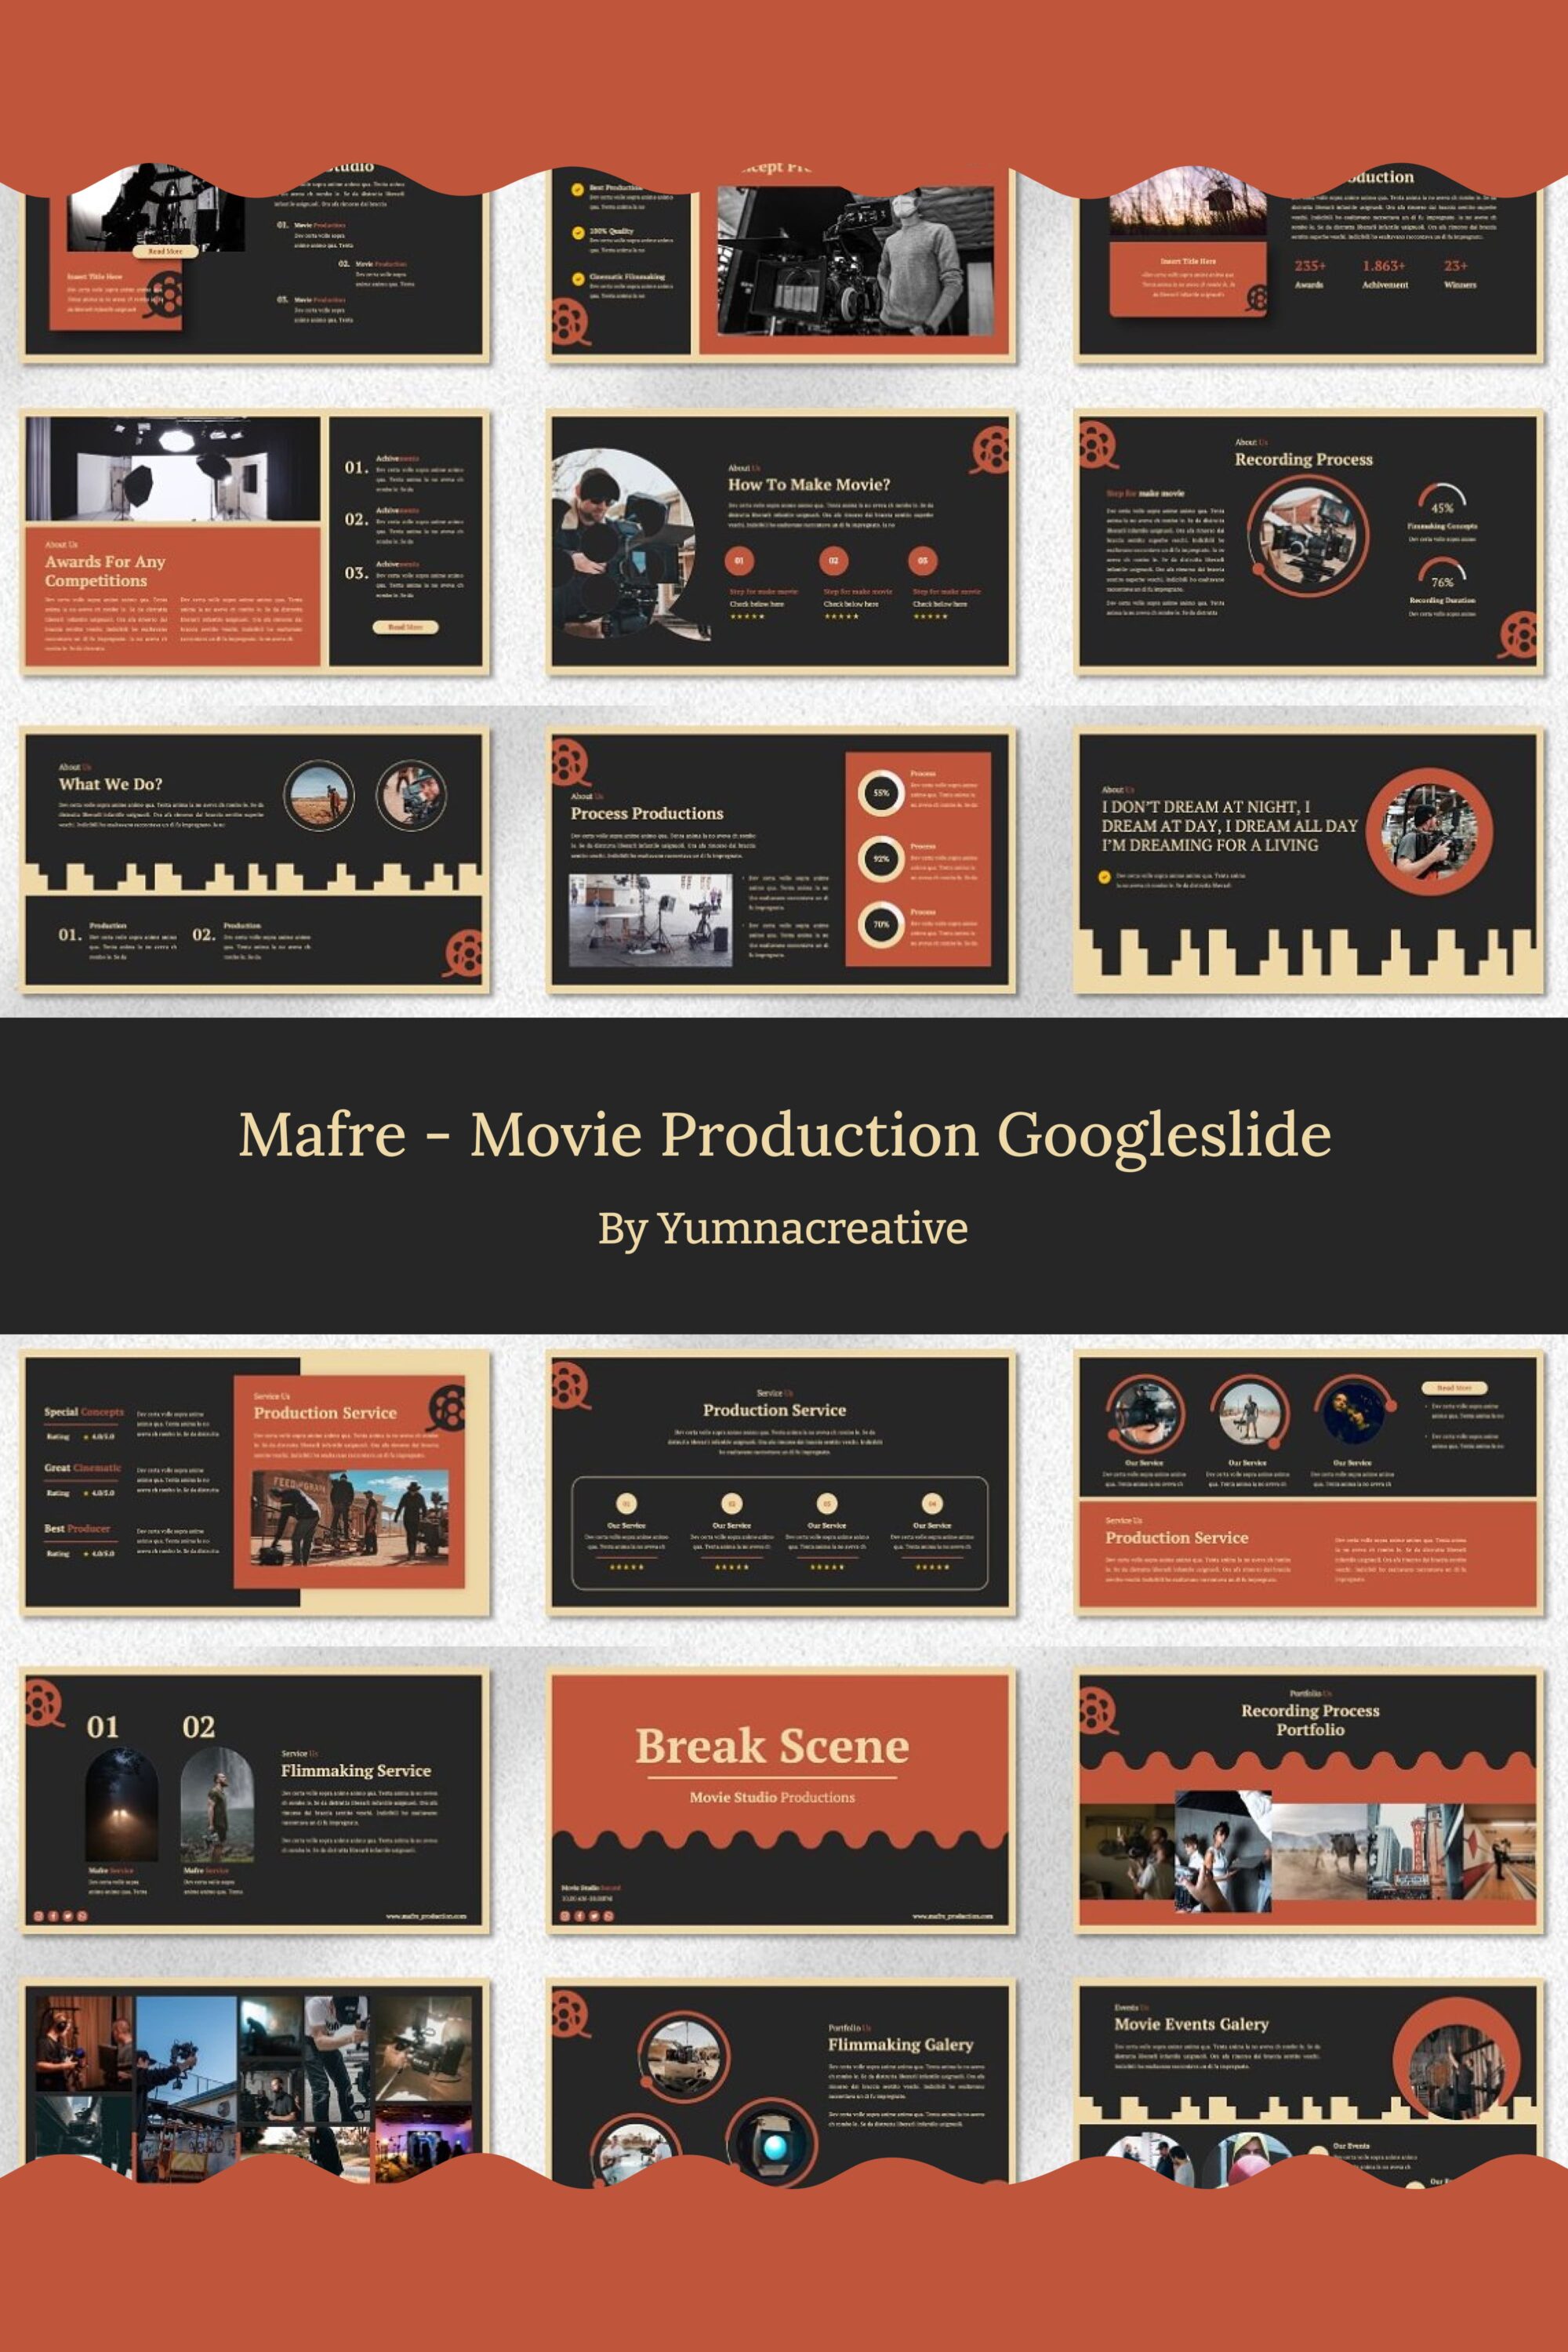 Mafre Movie Production Googleslide - pinterest image preview.